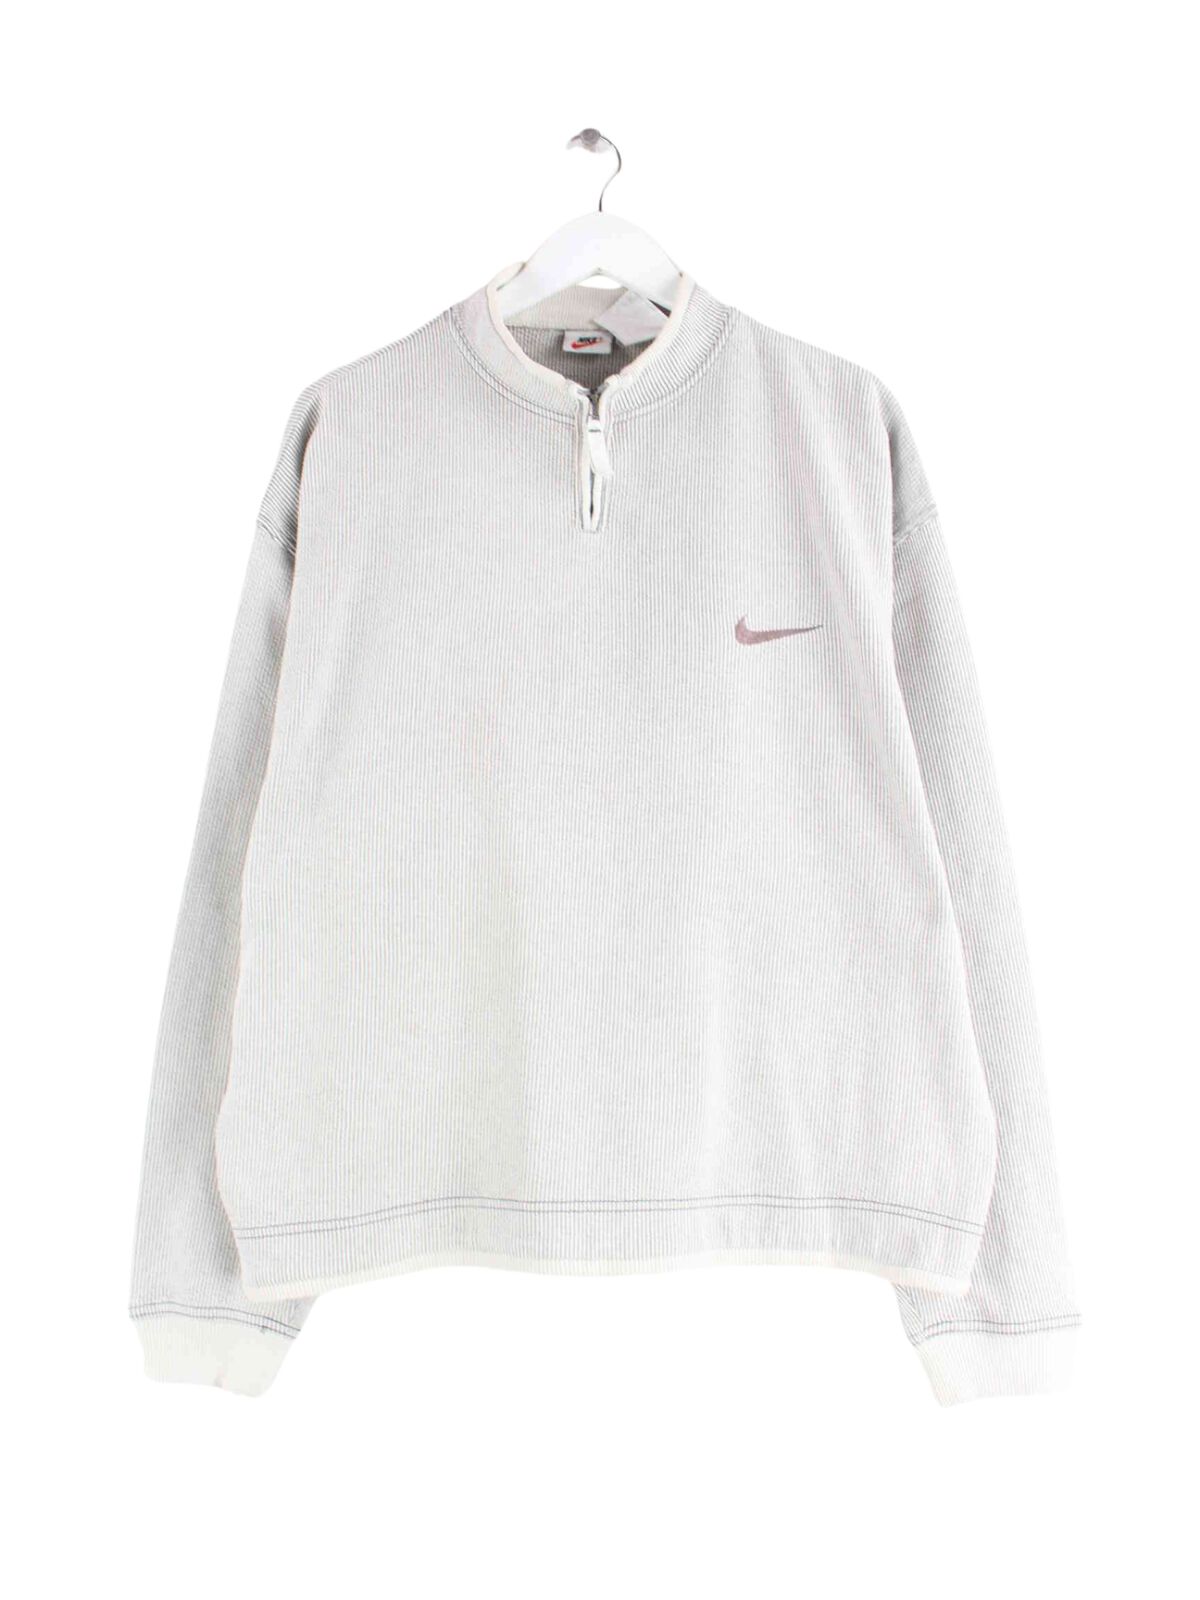 Nike 90s Vintage Half Zip Swoosh Sweater Grau XL (front image)